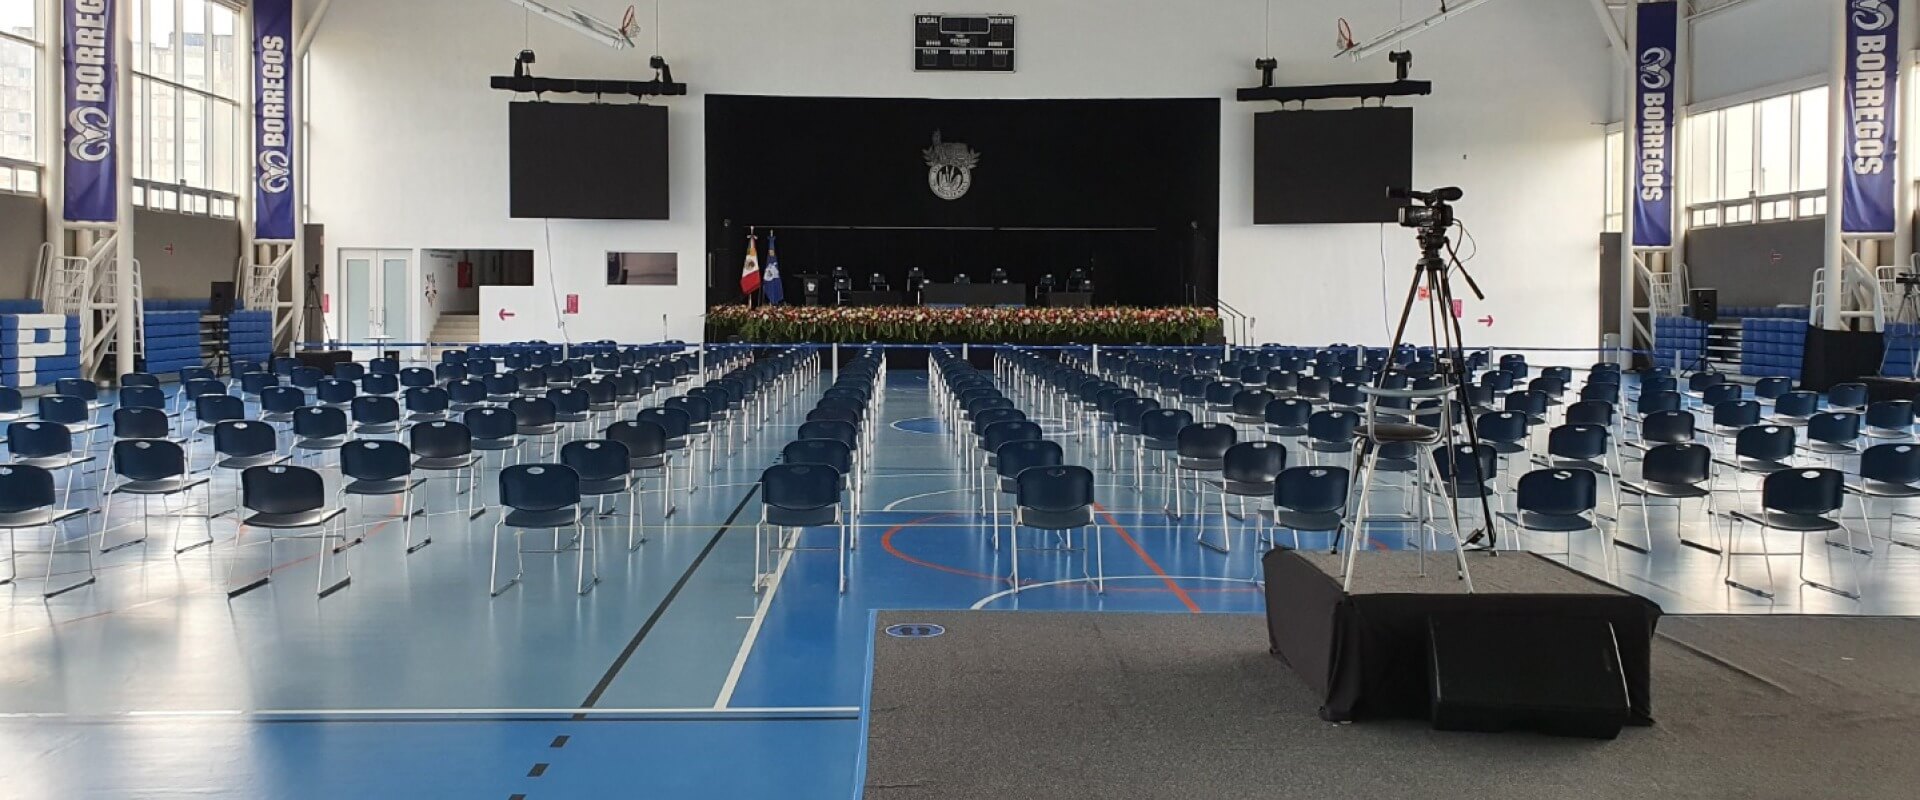 Centro Estudiantil Auditorio (CEA), San Luis Potosí